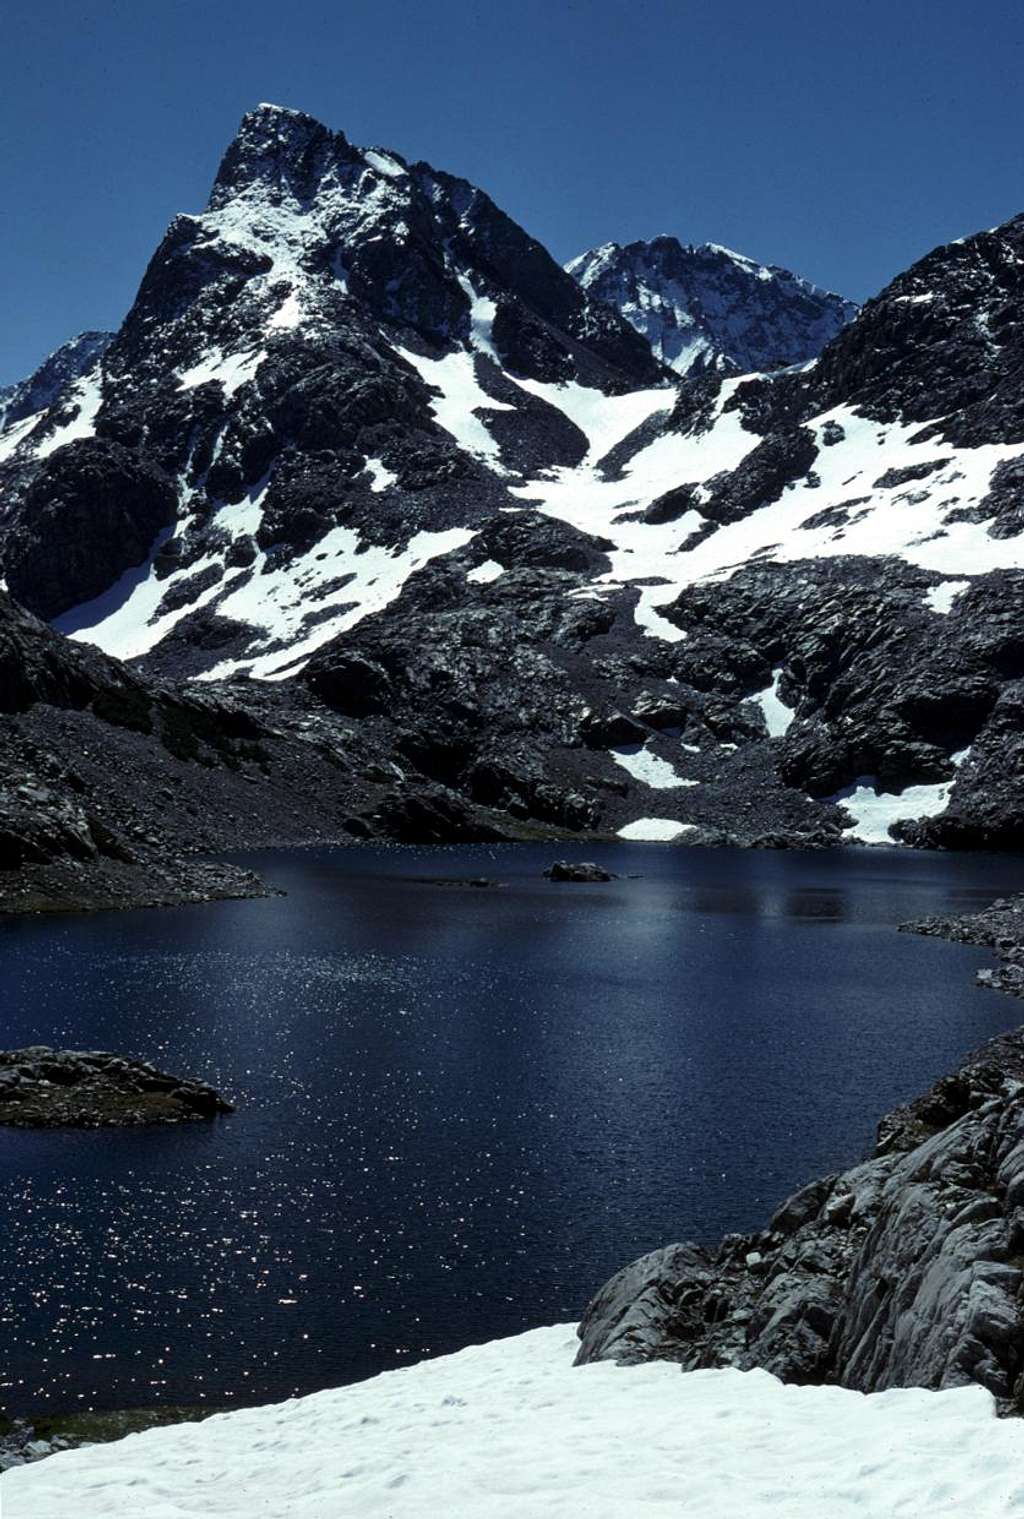 Mount Goddard (right) and Peak 12,964